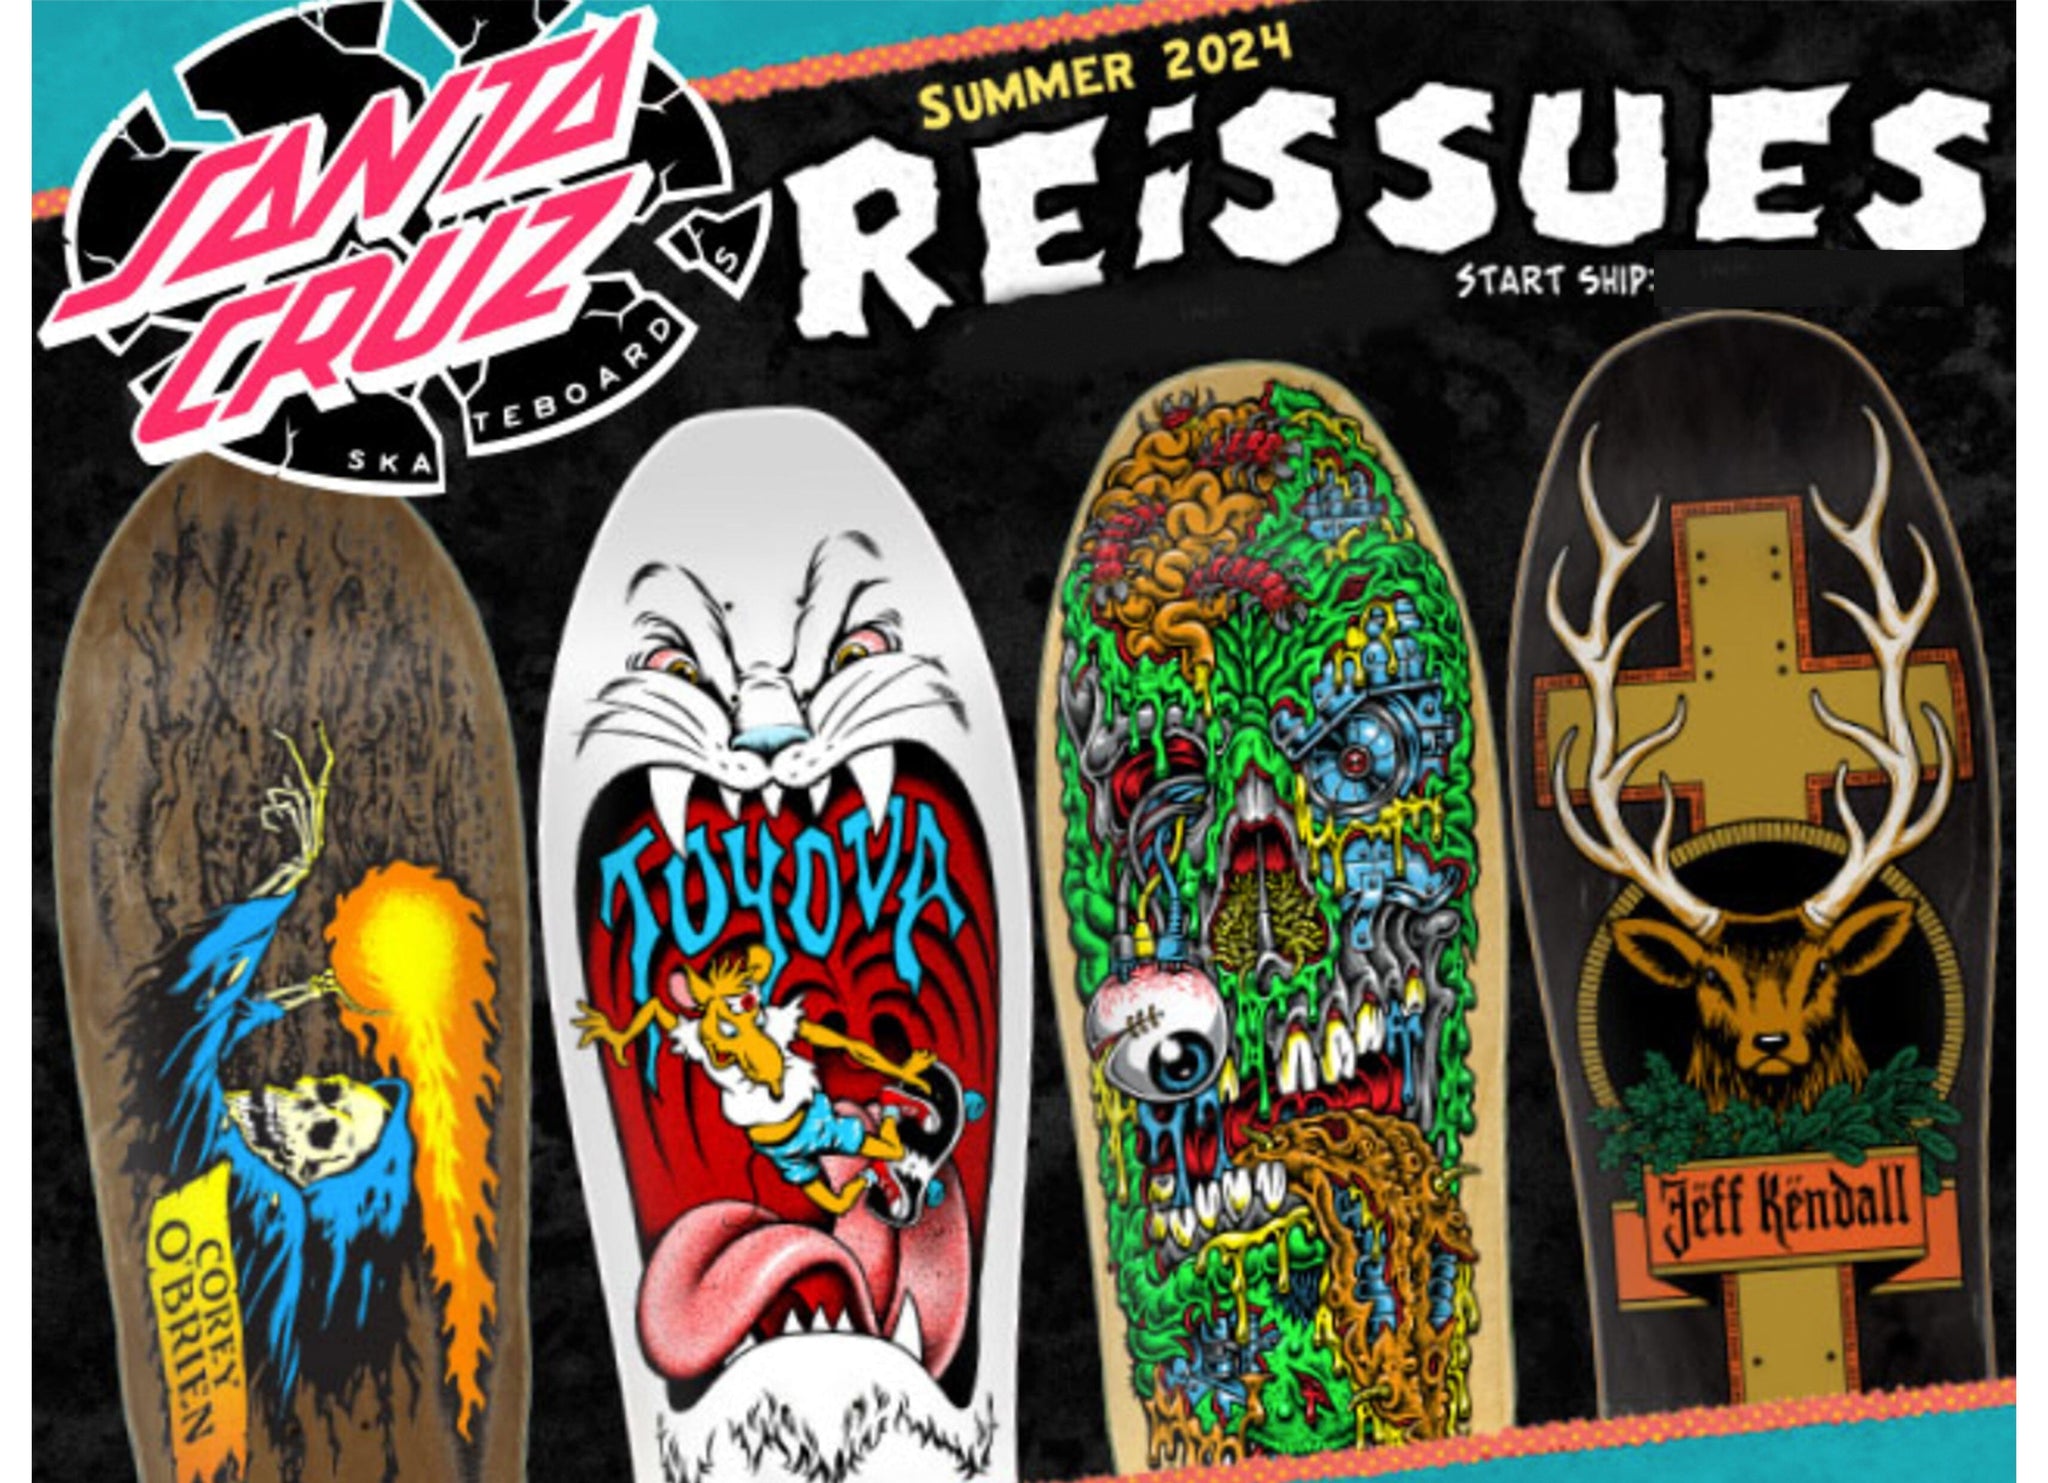 Santa Cruz Roskopp Face Three 9.9 Reissue Skateboard Deck Preorder - Tabla Tabla/Deck Santa Cruz Skateboards 